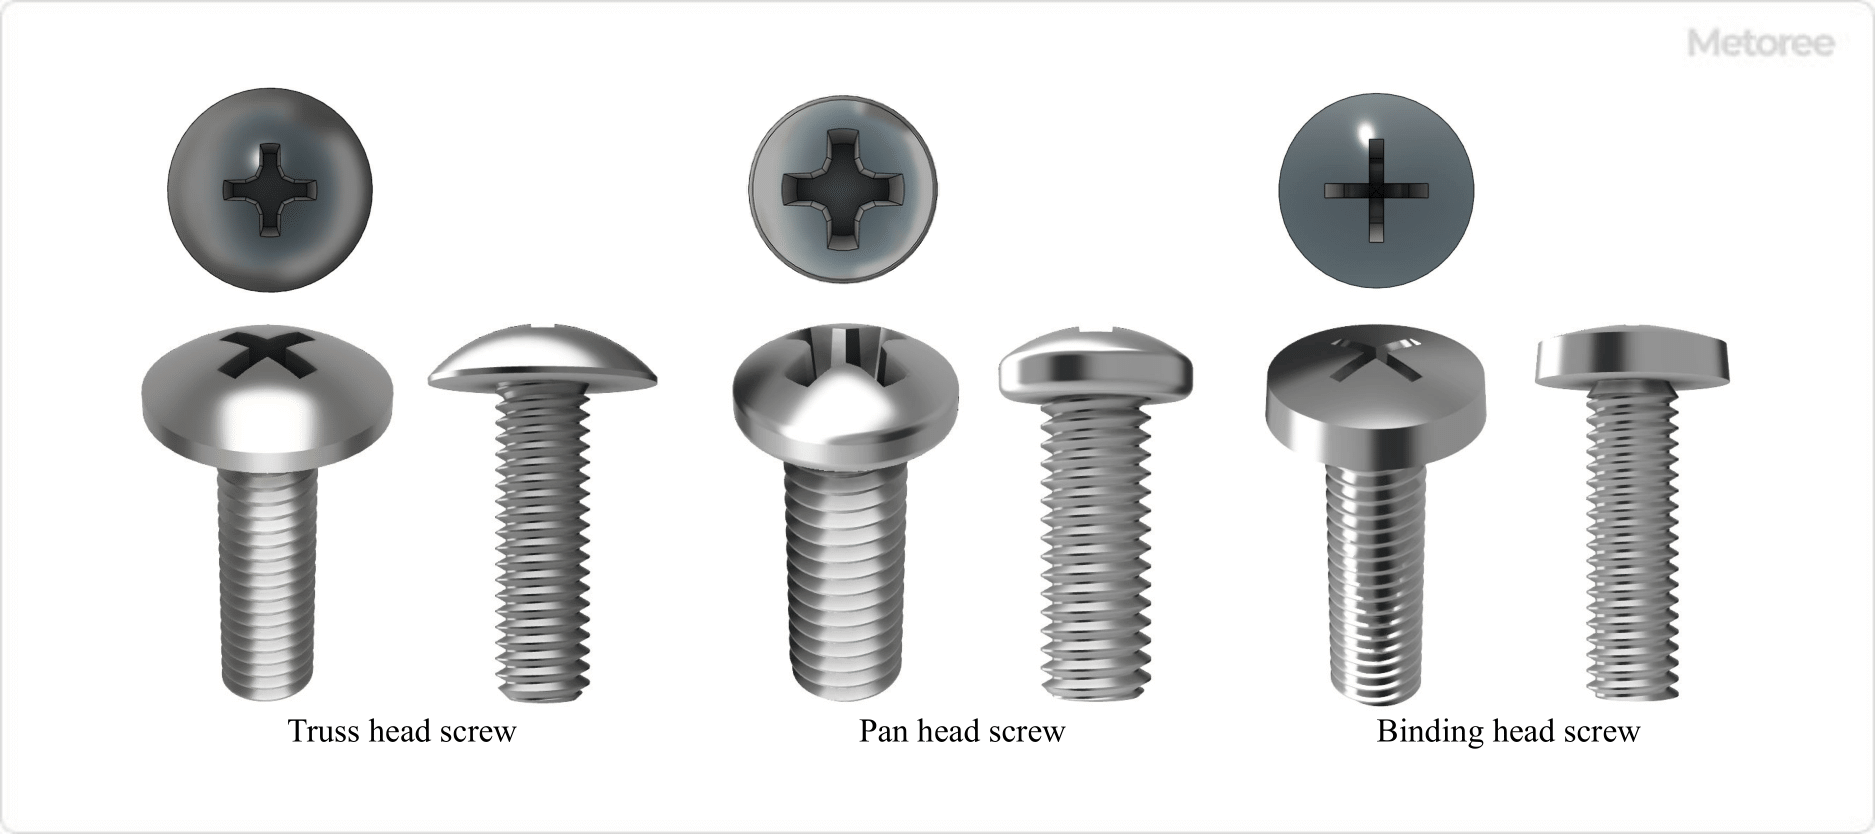 Figure 1. Truss head screw, Pan head screw, Binding head screw